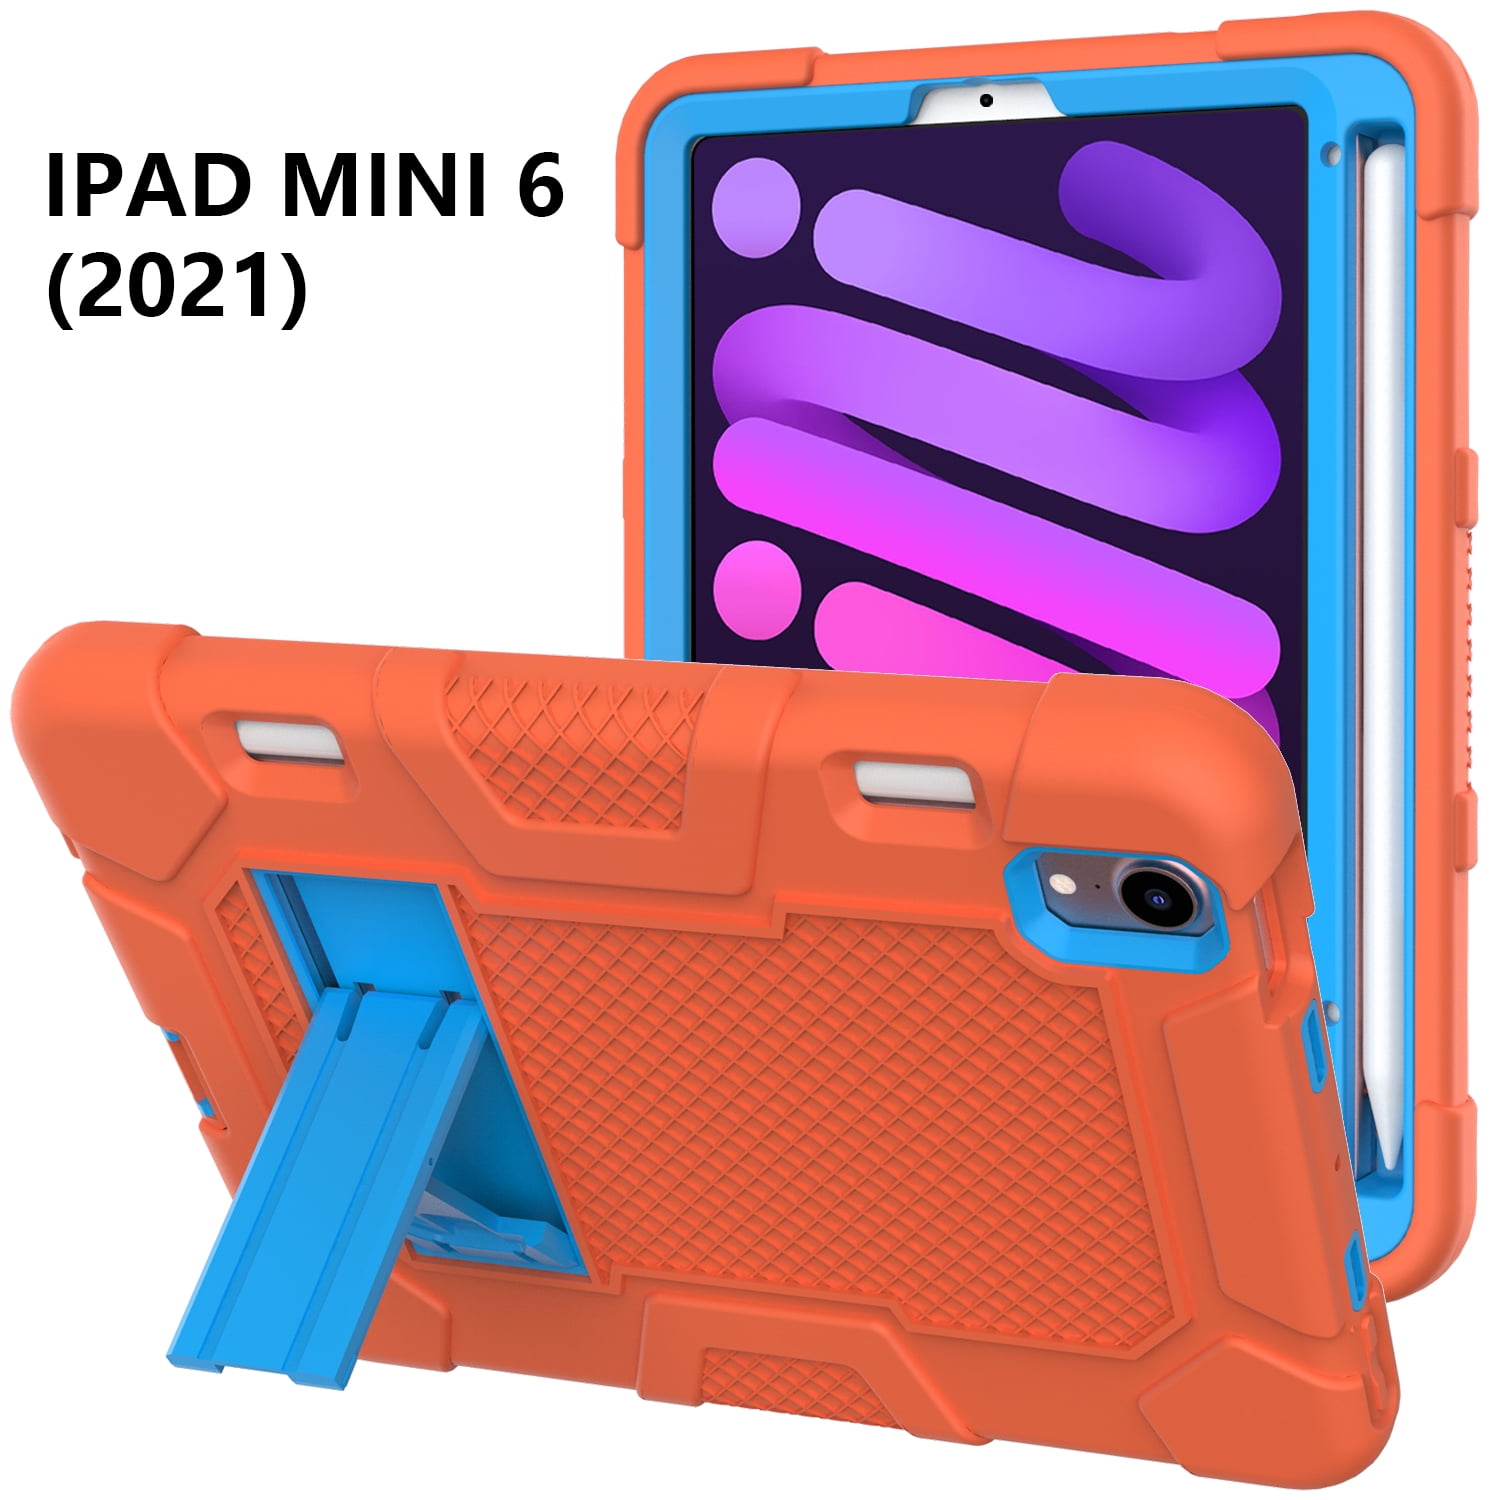 Ipad Mini 6 Shockproof Case, Ipad Mini 6 Protective Case